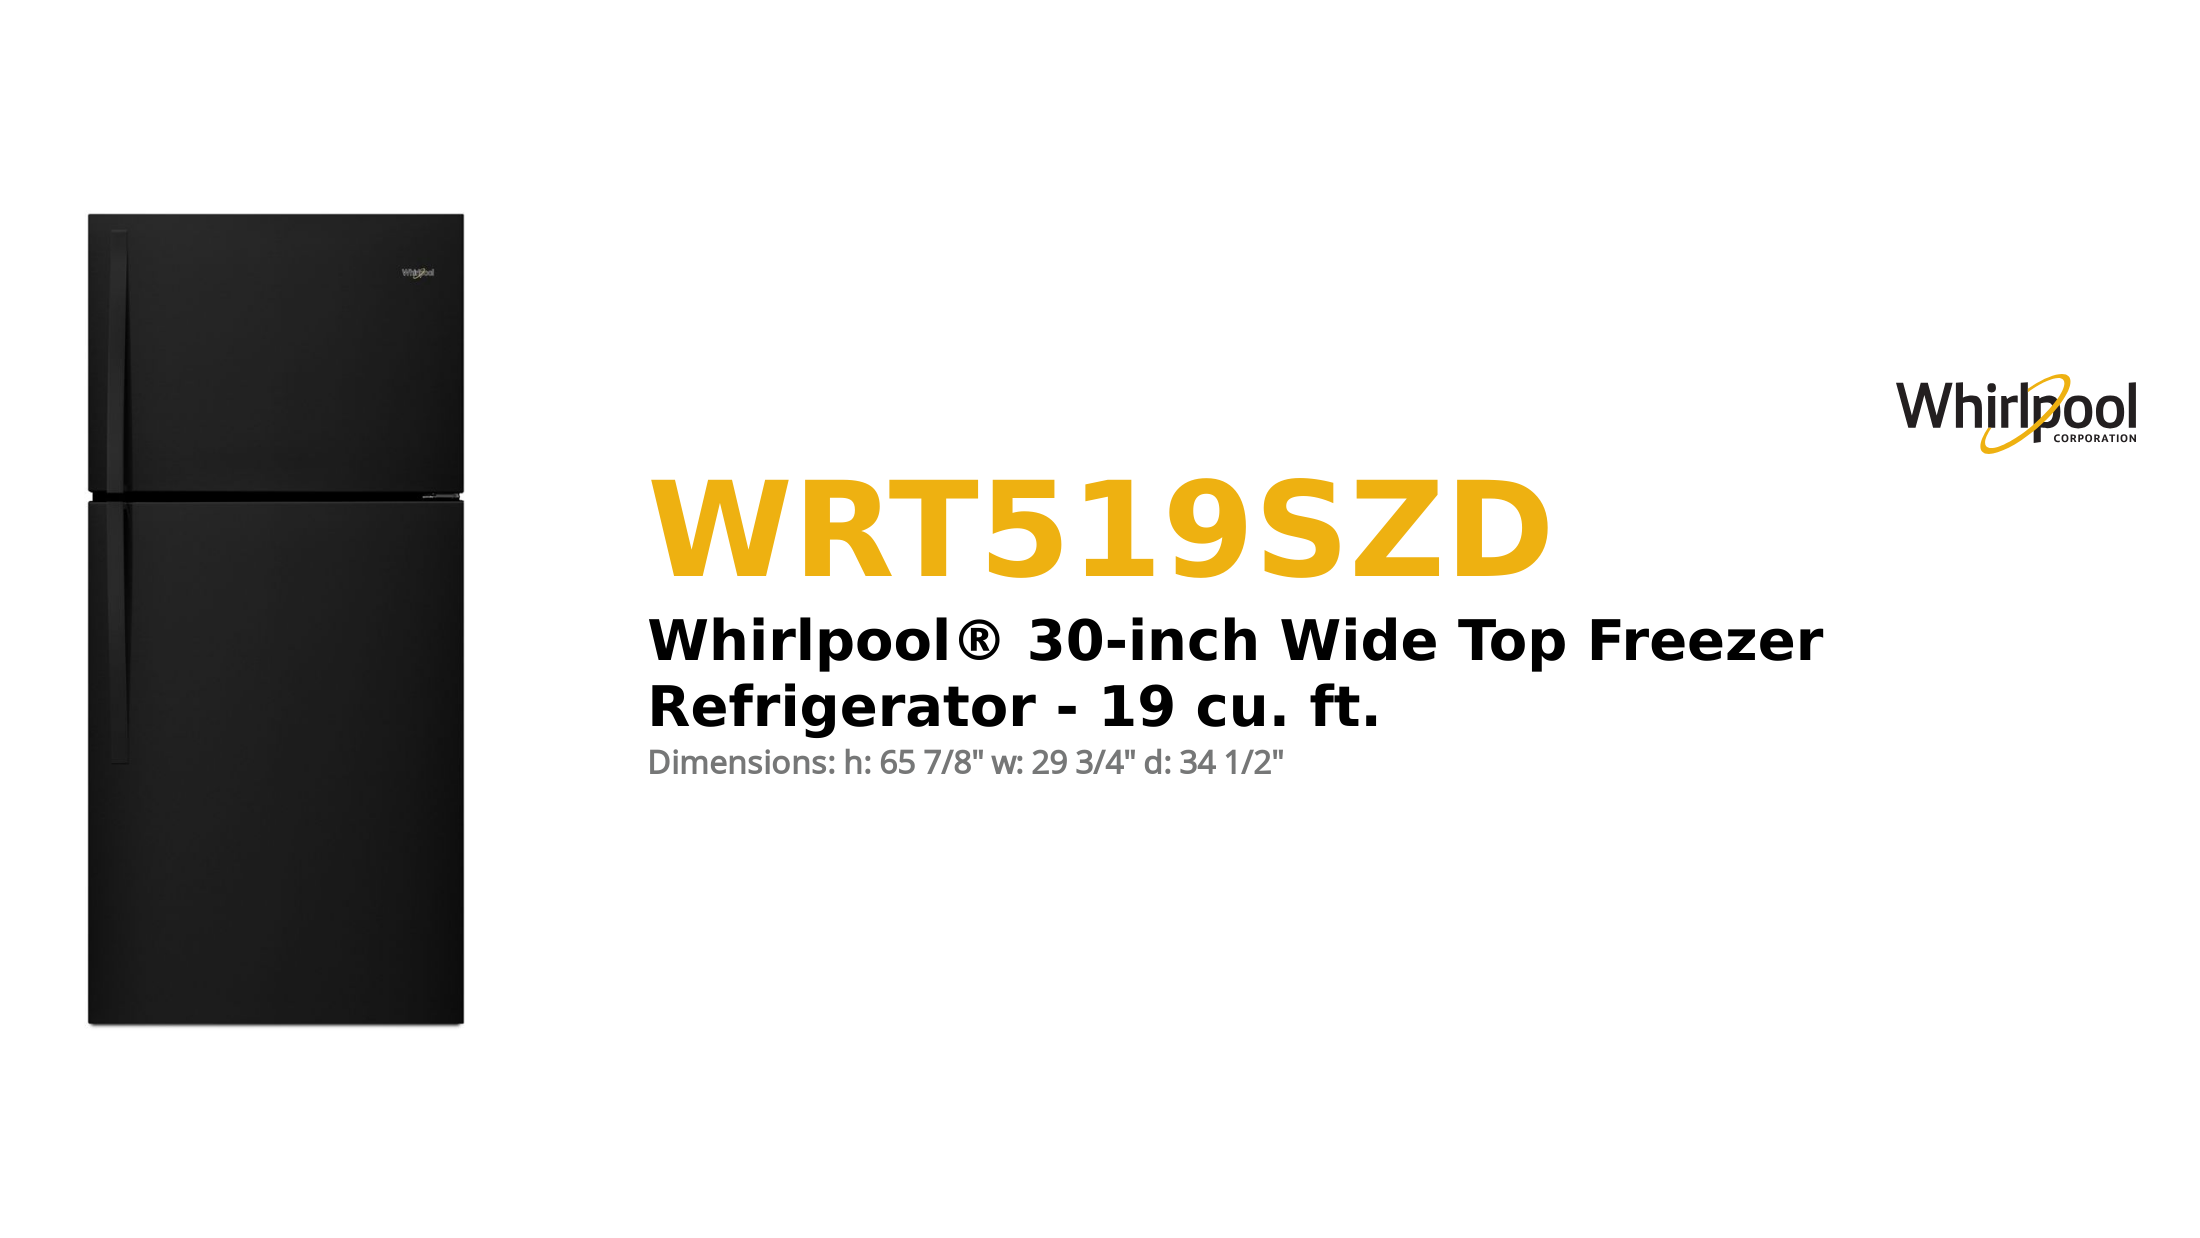 Whirlpool® 30-inch Wide Top Freezer Refrigerator - 19 cu. ft.